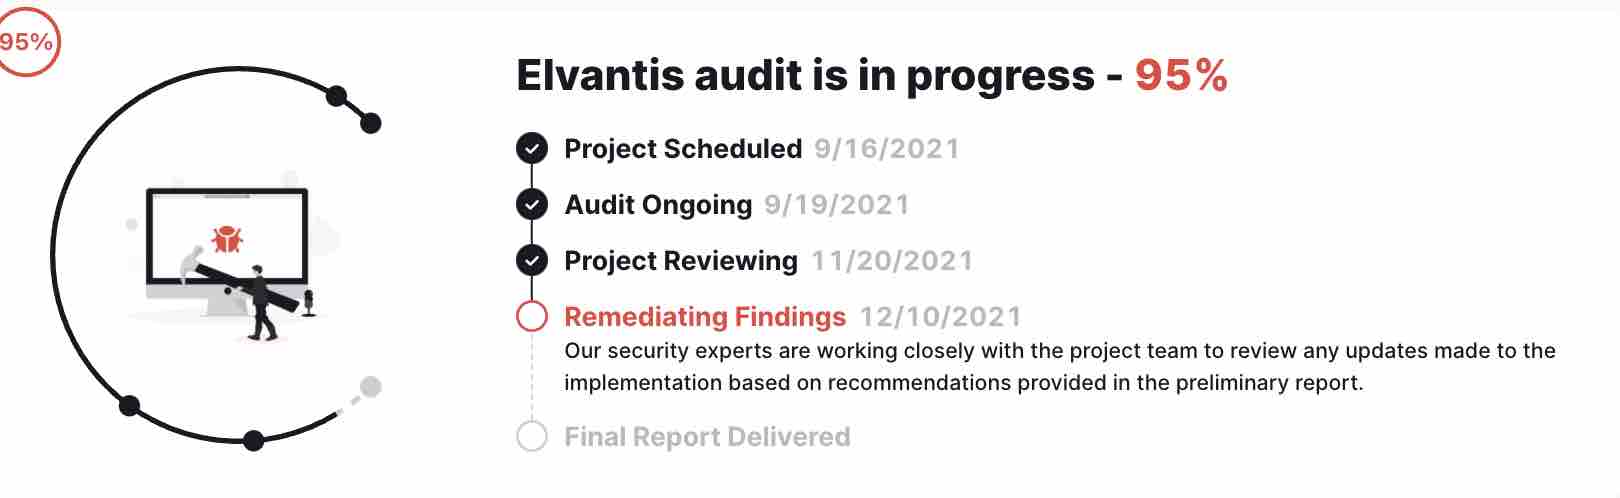 what is elvantis certik audit progress